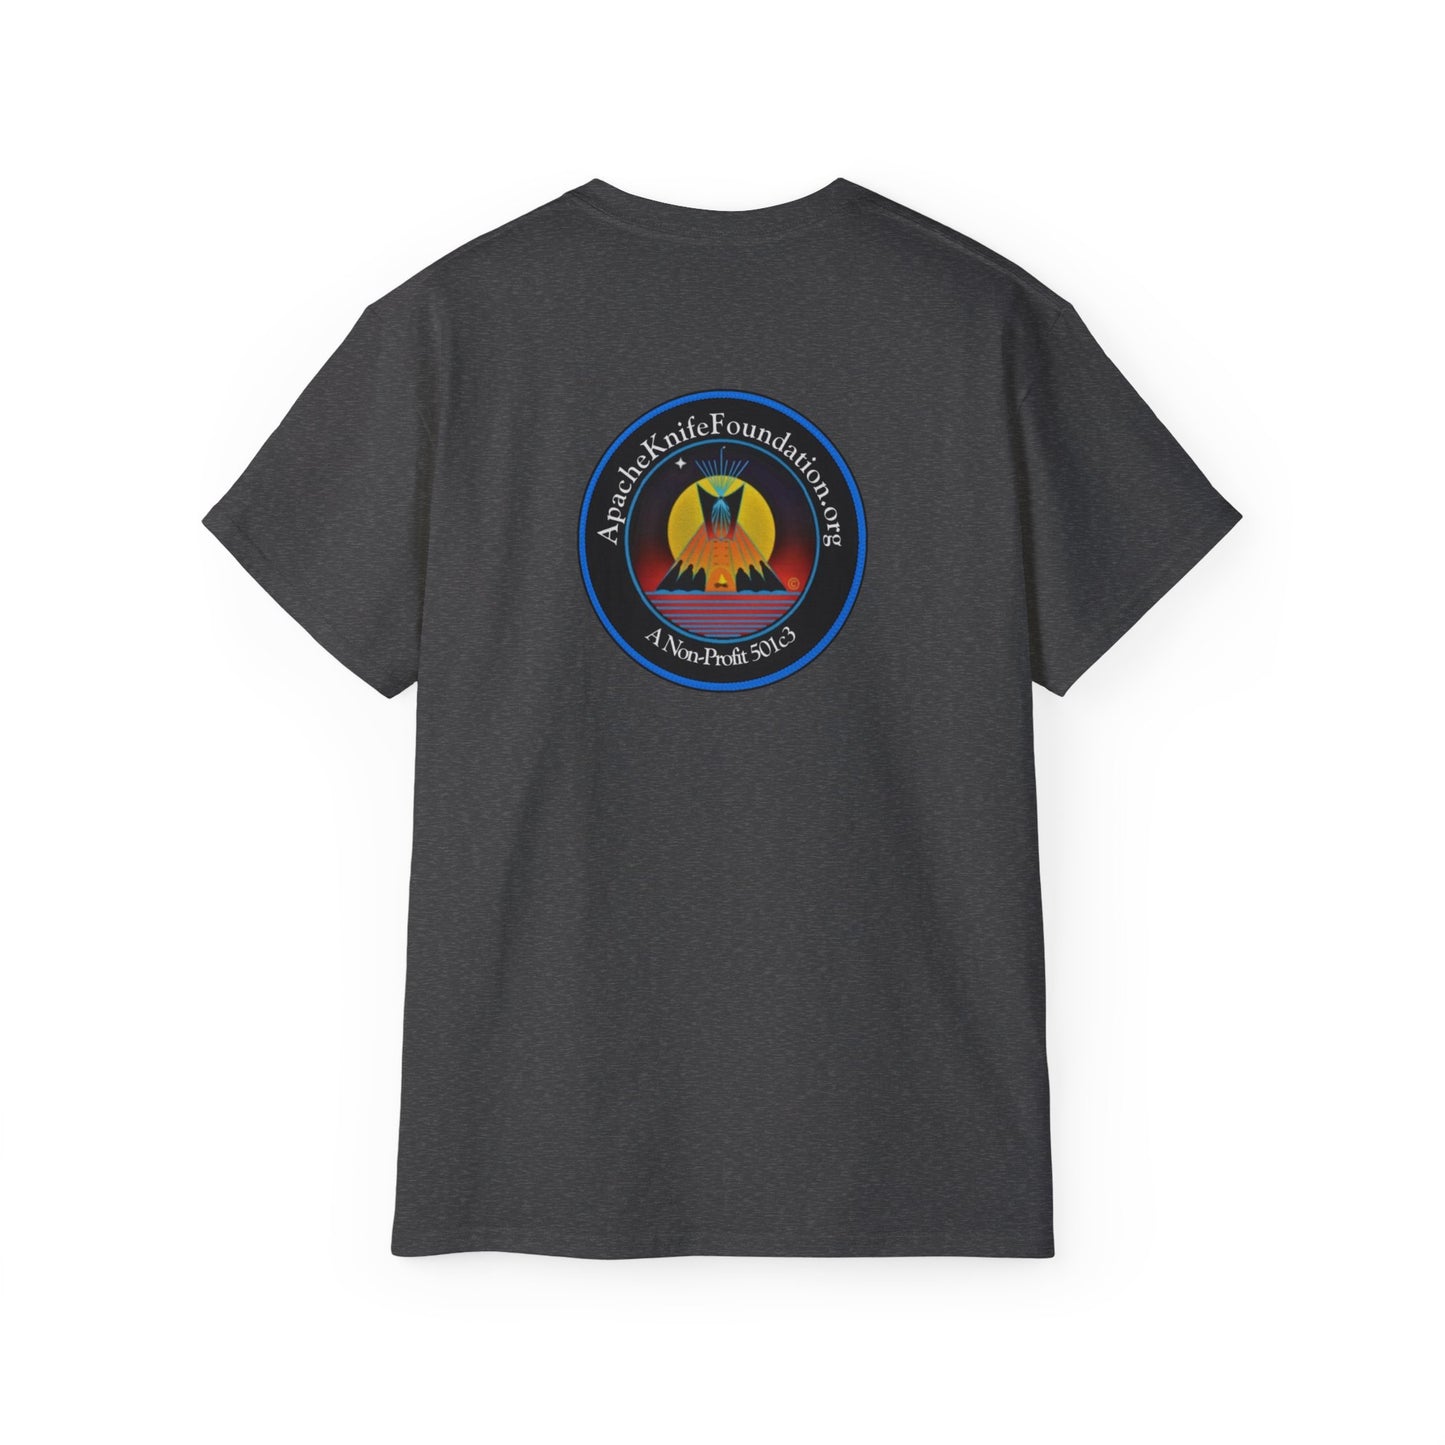 Camisa Apache Knife Foundation Nativo americano sin fines de lucro (pedido especial)